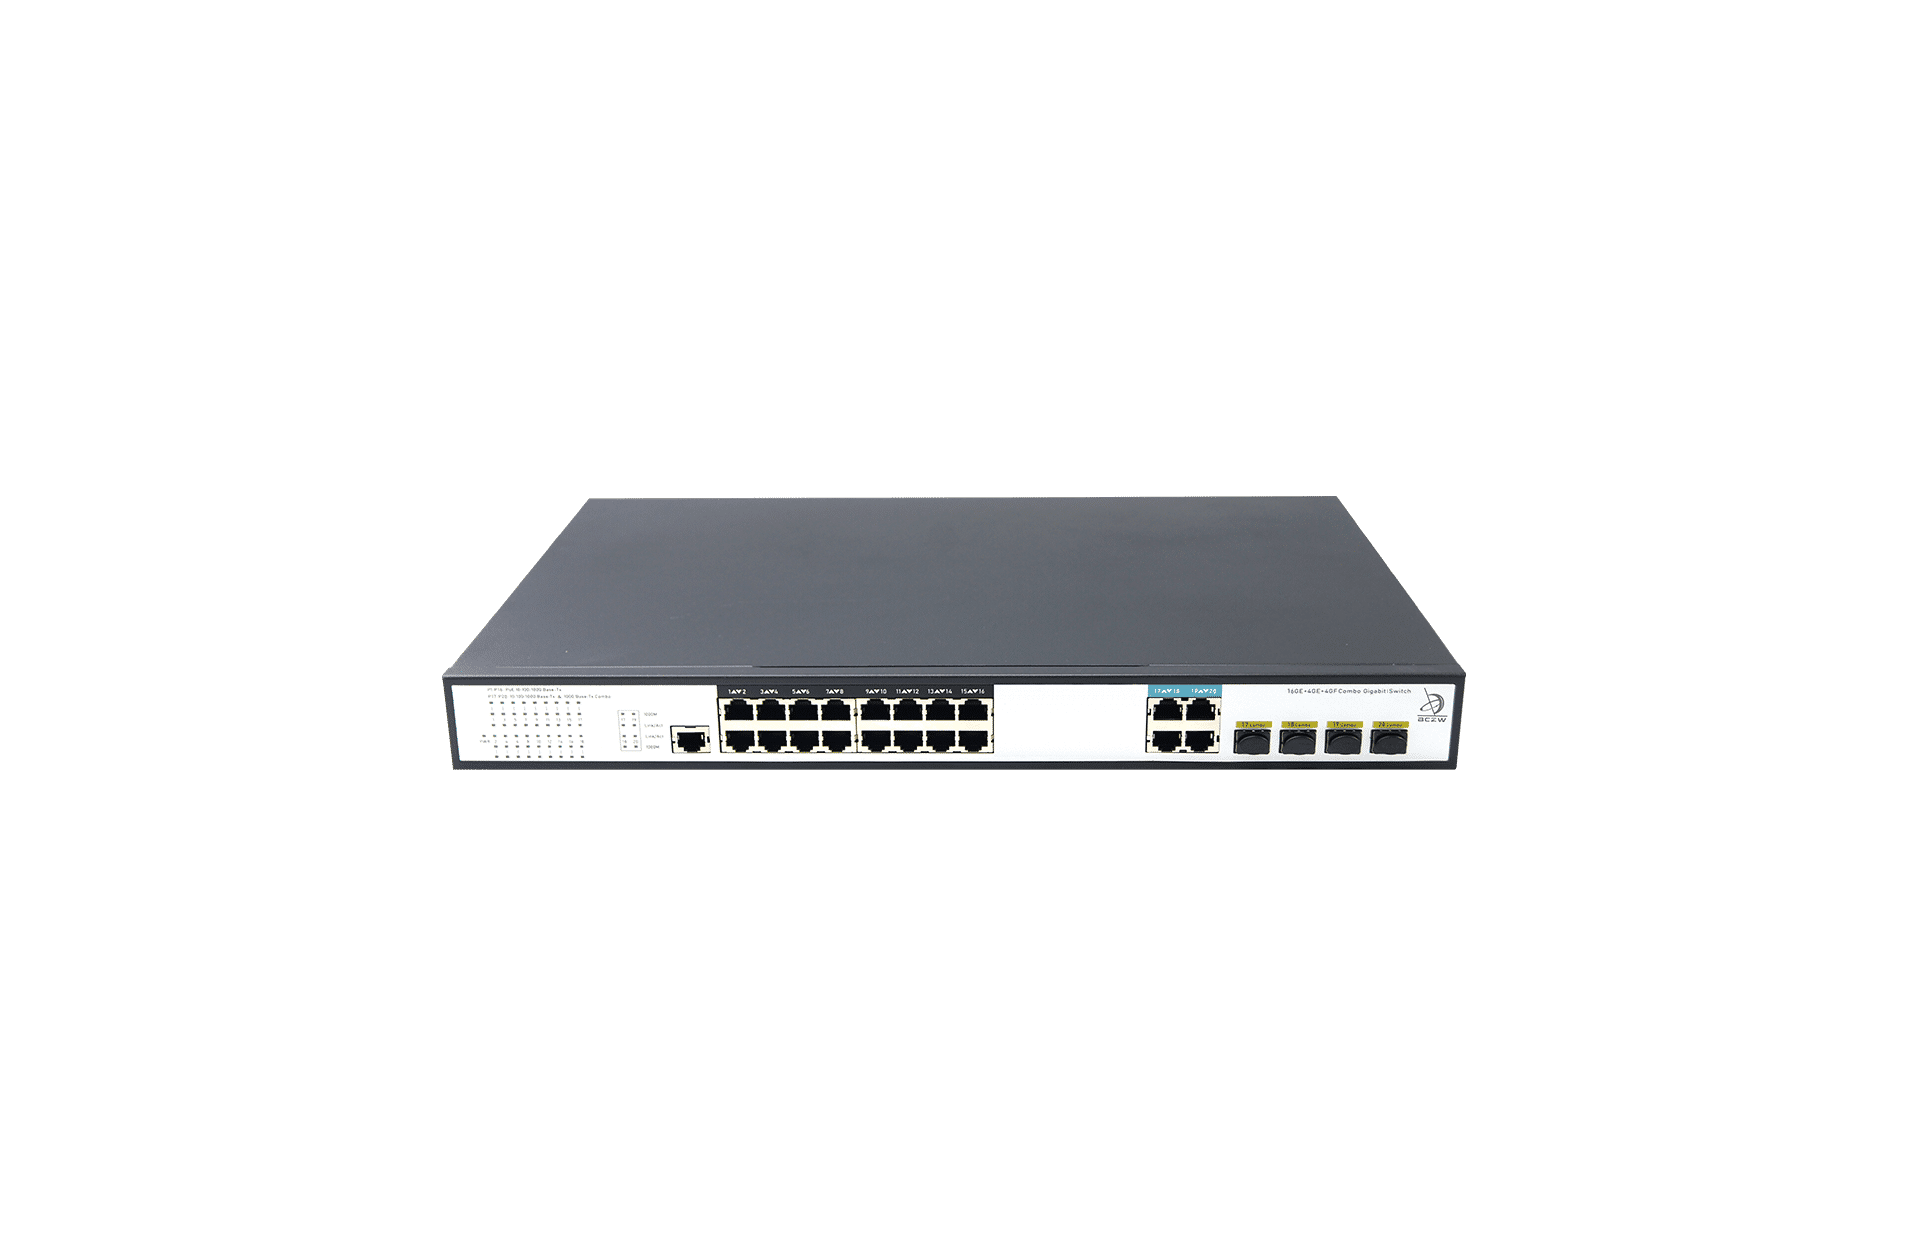 16-Port Layer 2 Managed Gigabit Ethernet Switch 4 Gigabit Combo Uplink